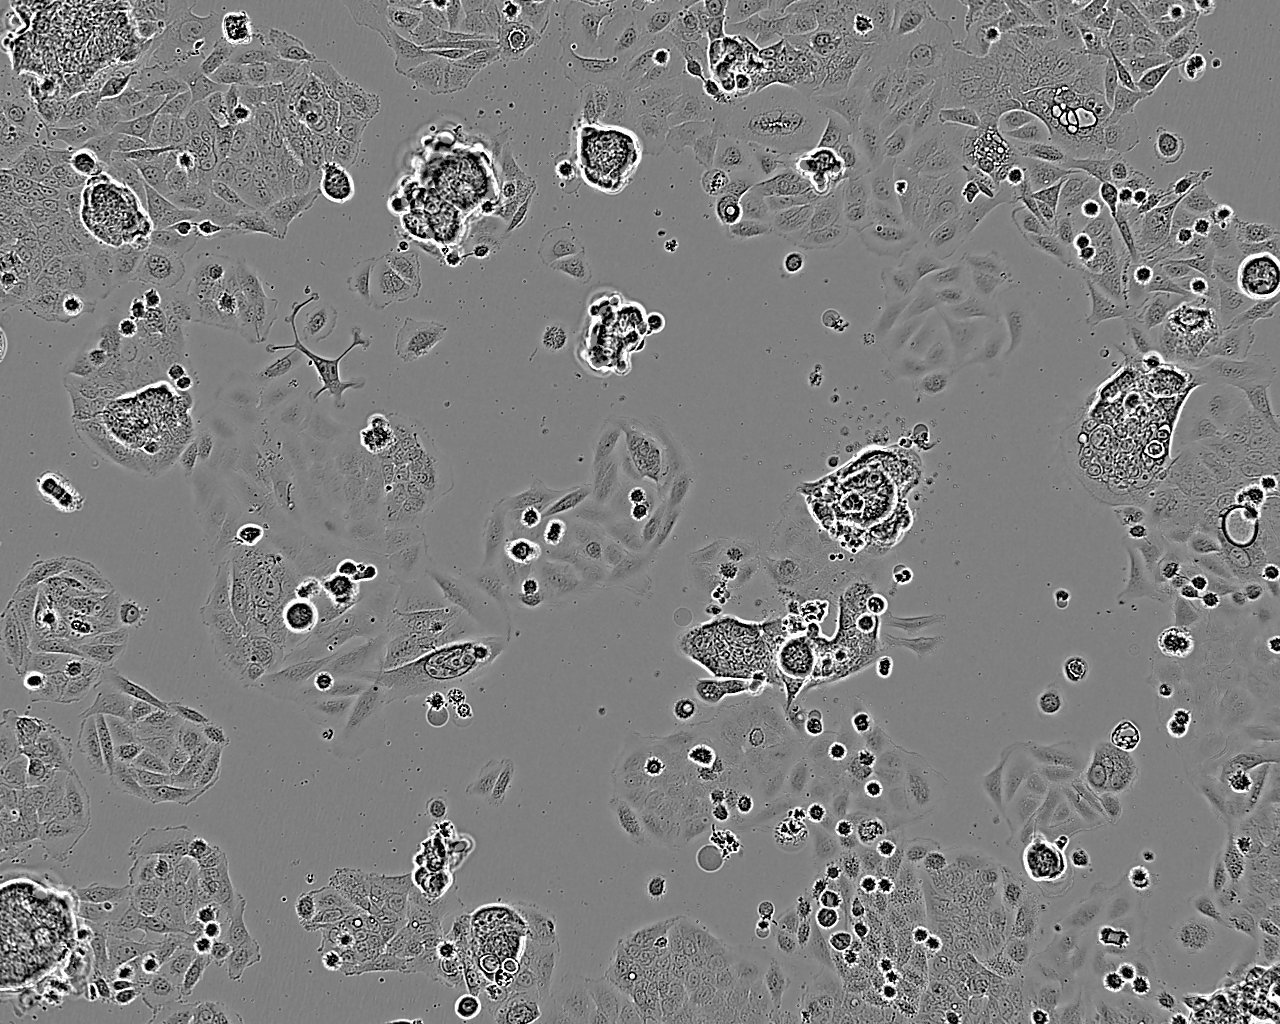 NCI-H1373 Fresh Cells|人肺癌腺癌细胞(送STR基因图谱),NCI-H1373 Fresh Cells